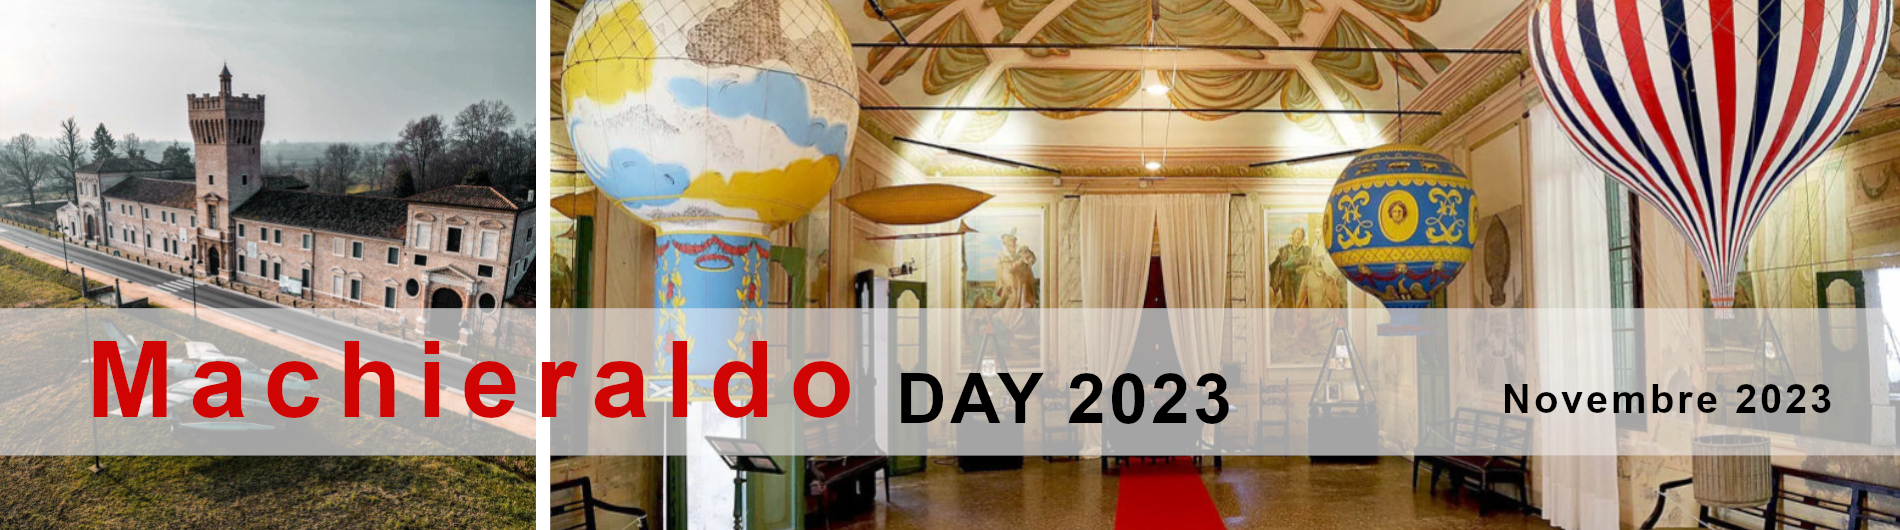 Machieraldo DAY 2023 - (19 November 2023)